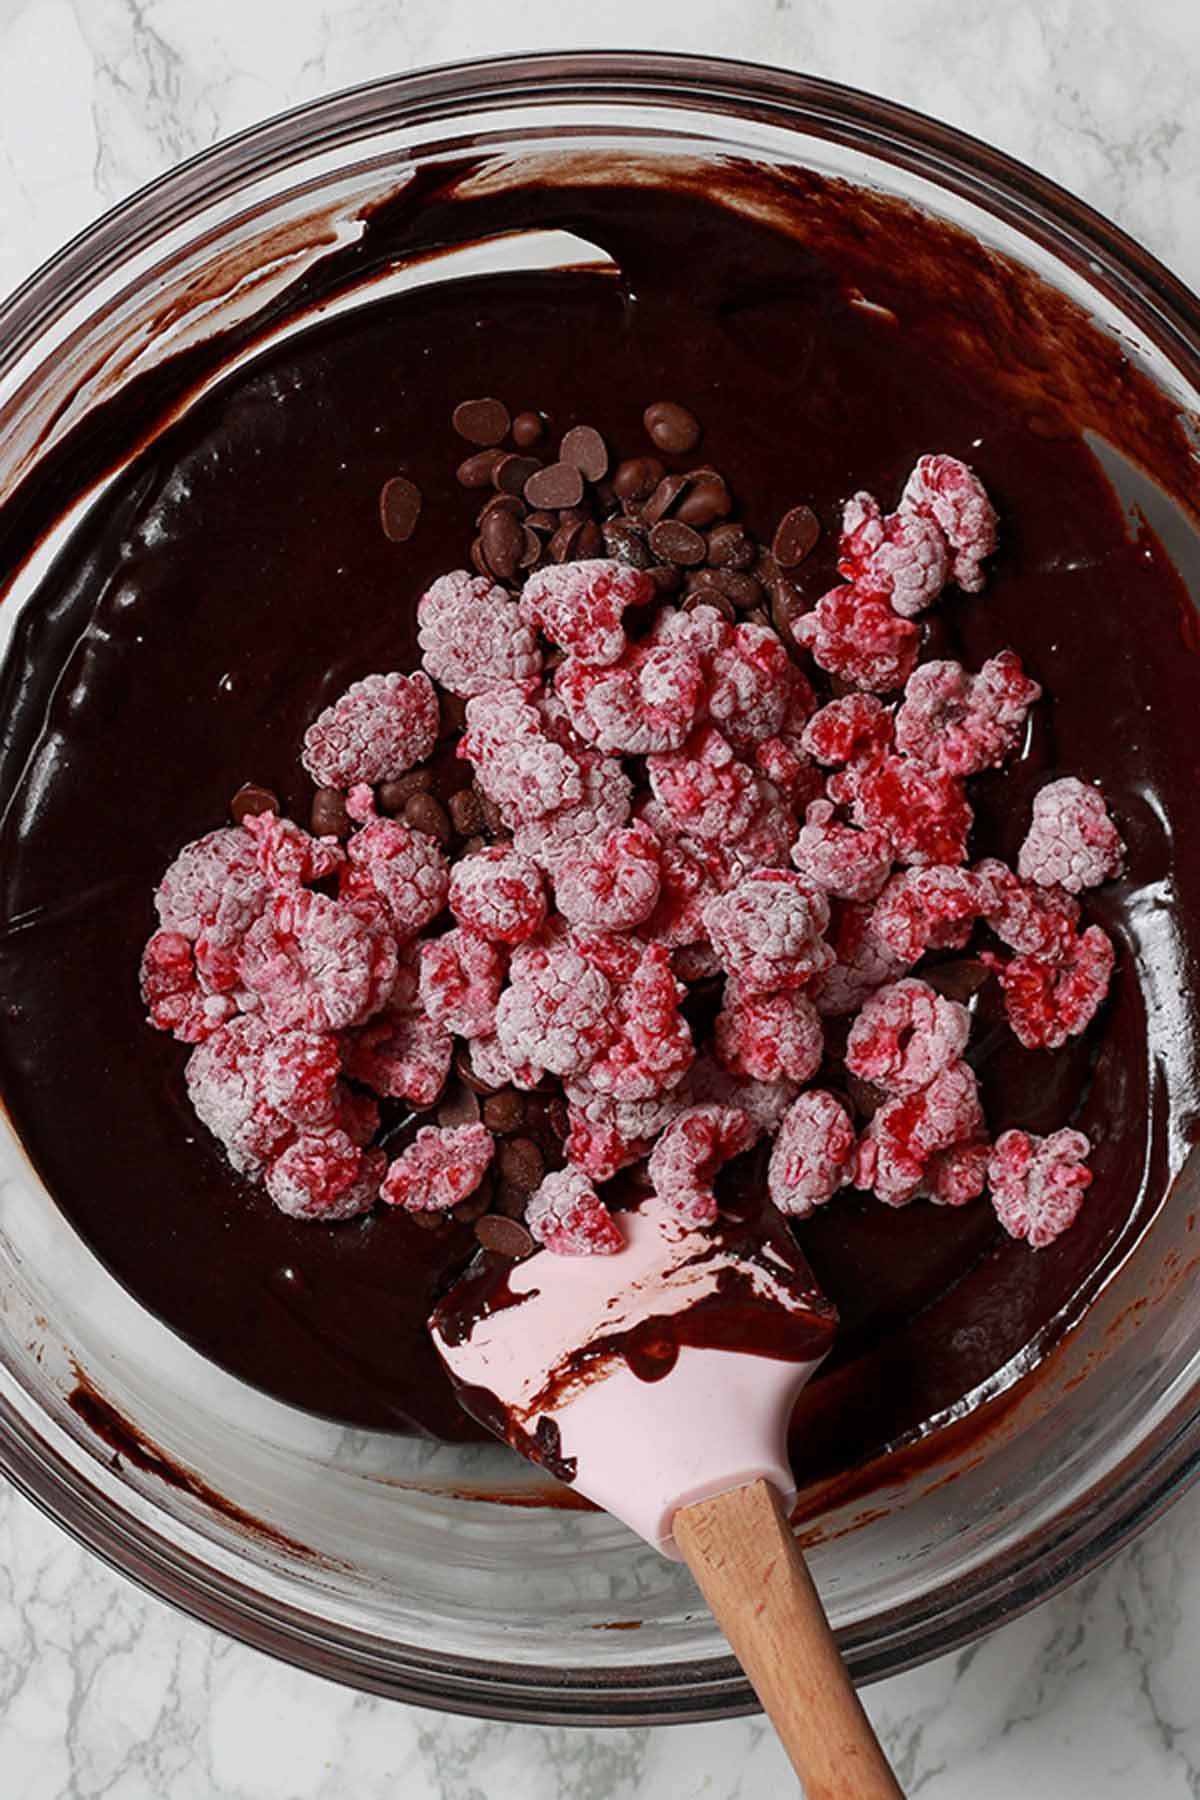 Stirring Raspberries Into The Chocolate Batter